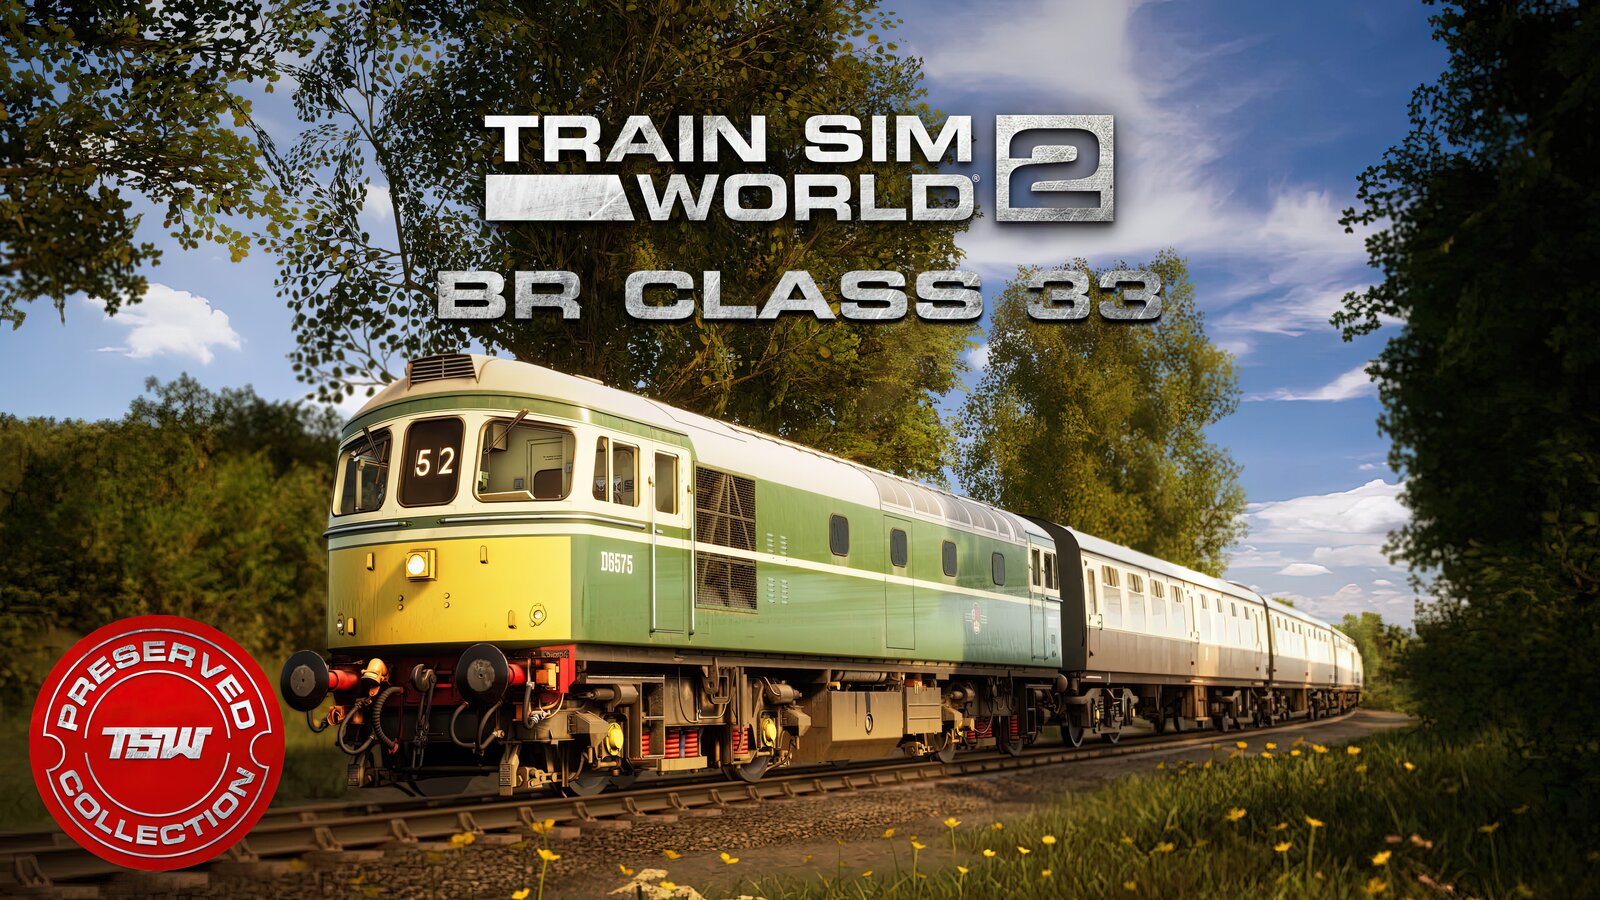 Train Sim World 2 - BR Class 33 Loco